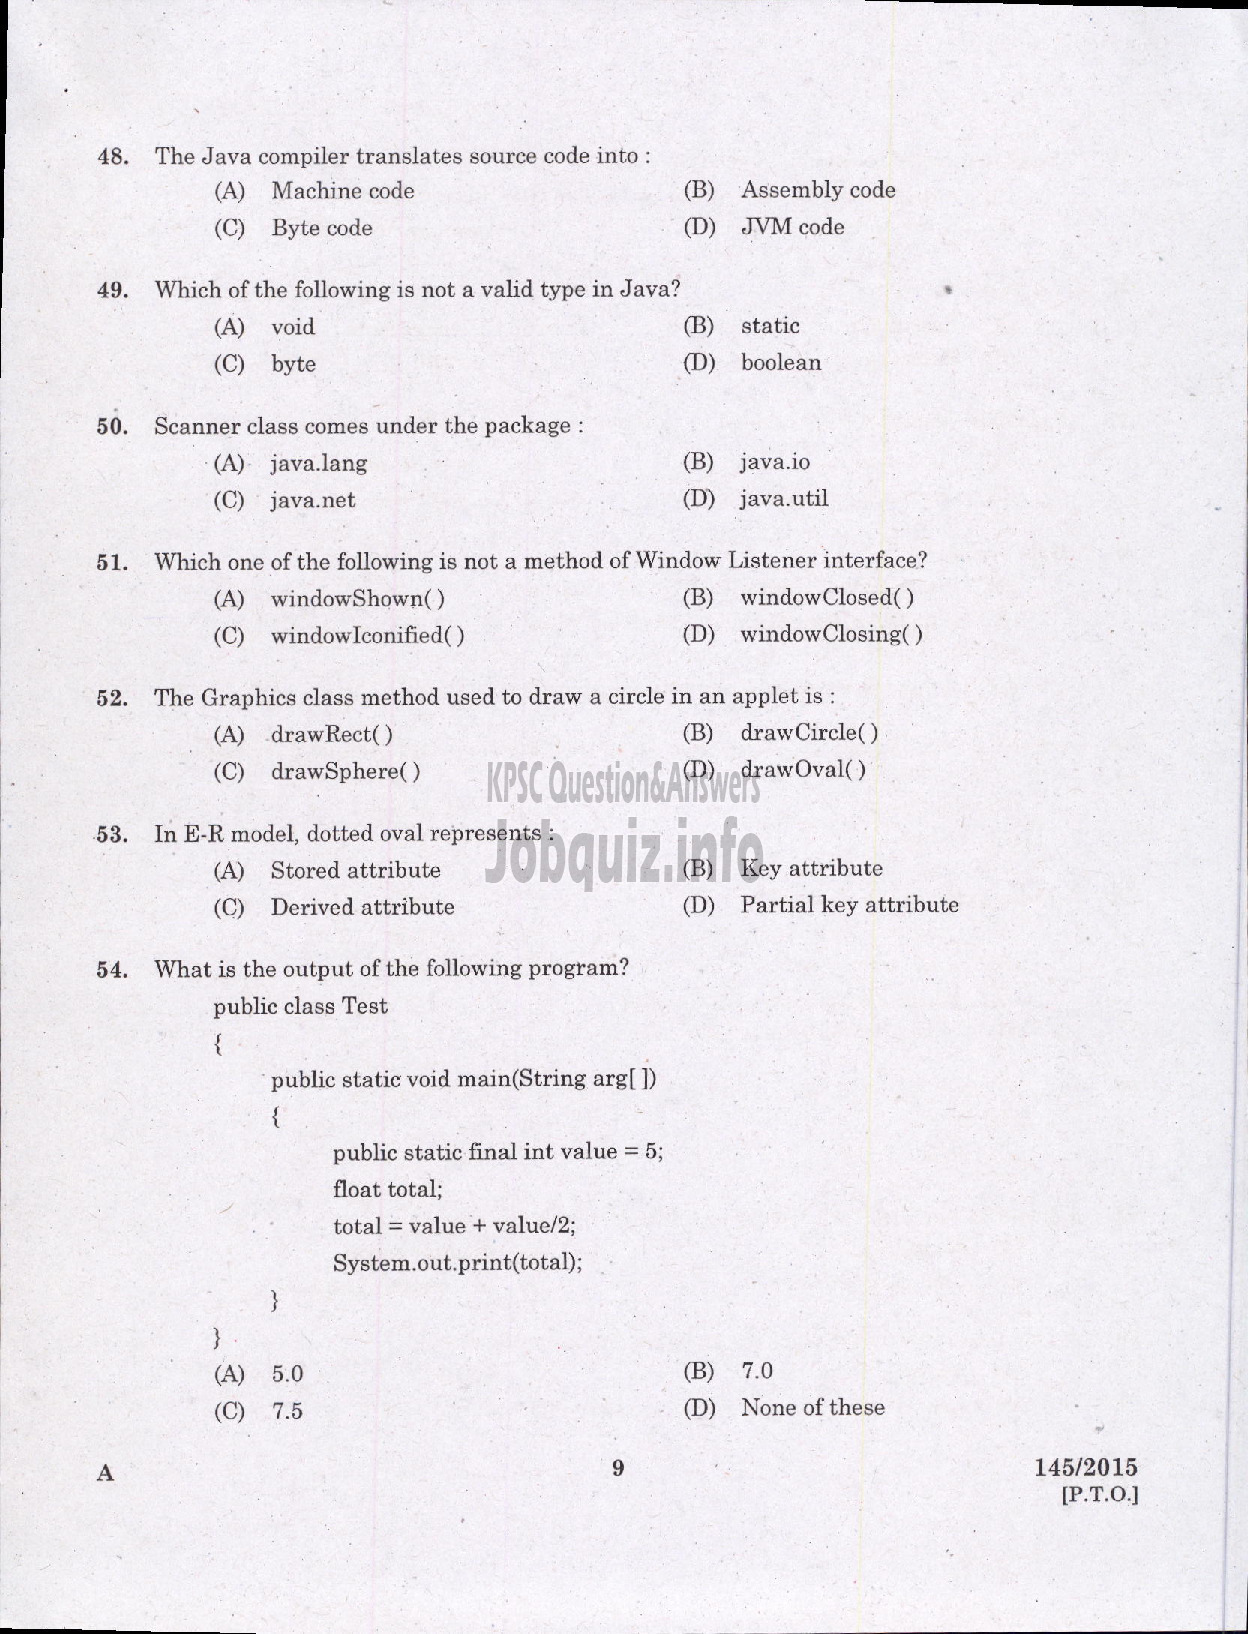 Kerala PSC Question Paper - PROGRAMMER KPSC-7